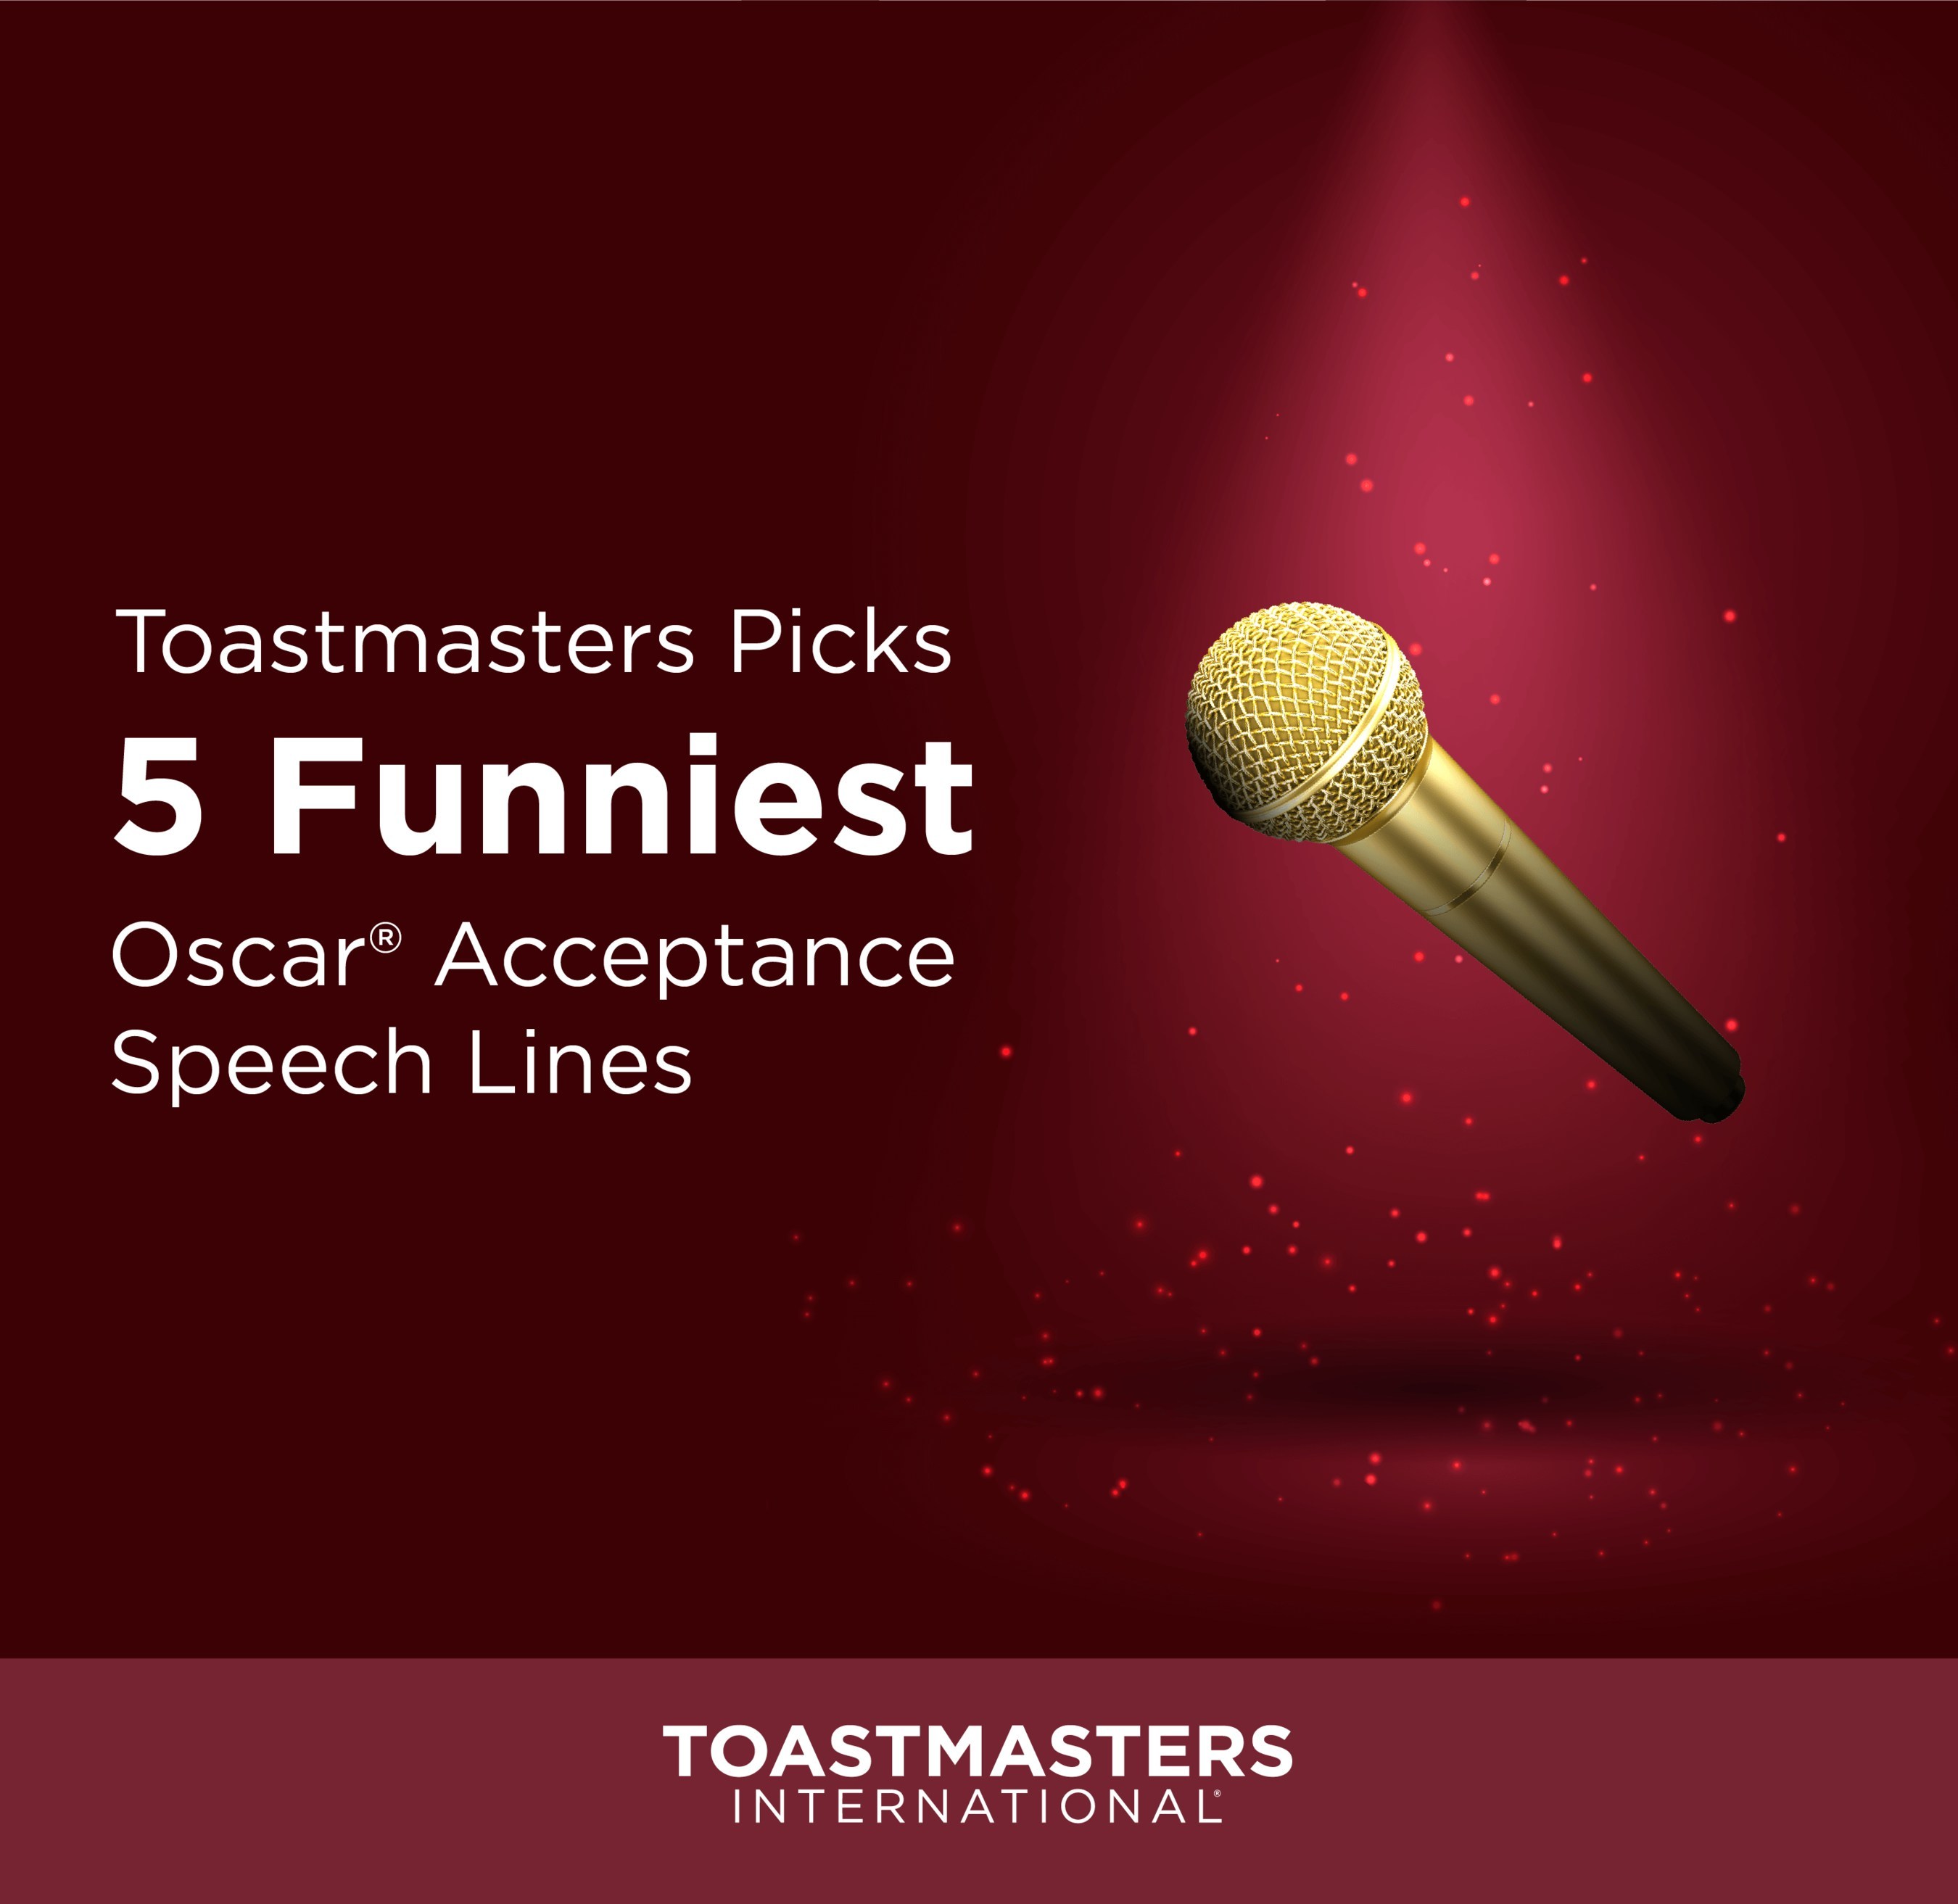 Toastmasters Picks 5 Funniest Oscar® Acceptance Speech Lines - Apr 20, 2021